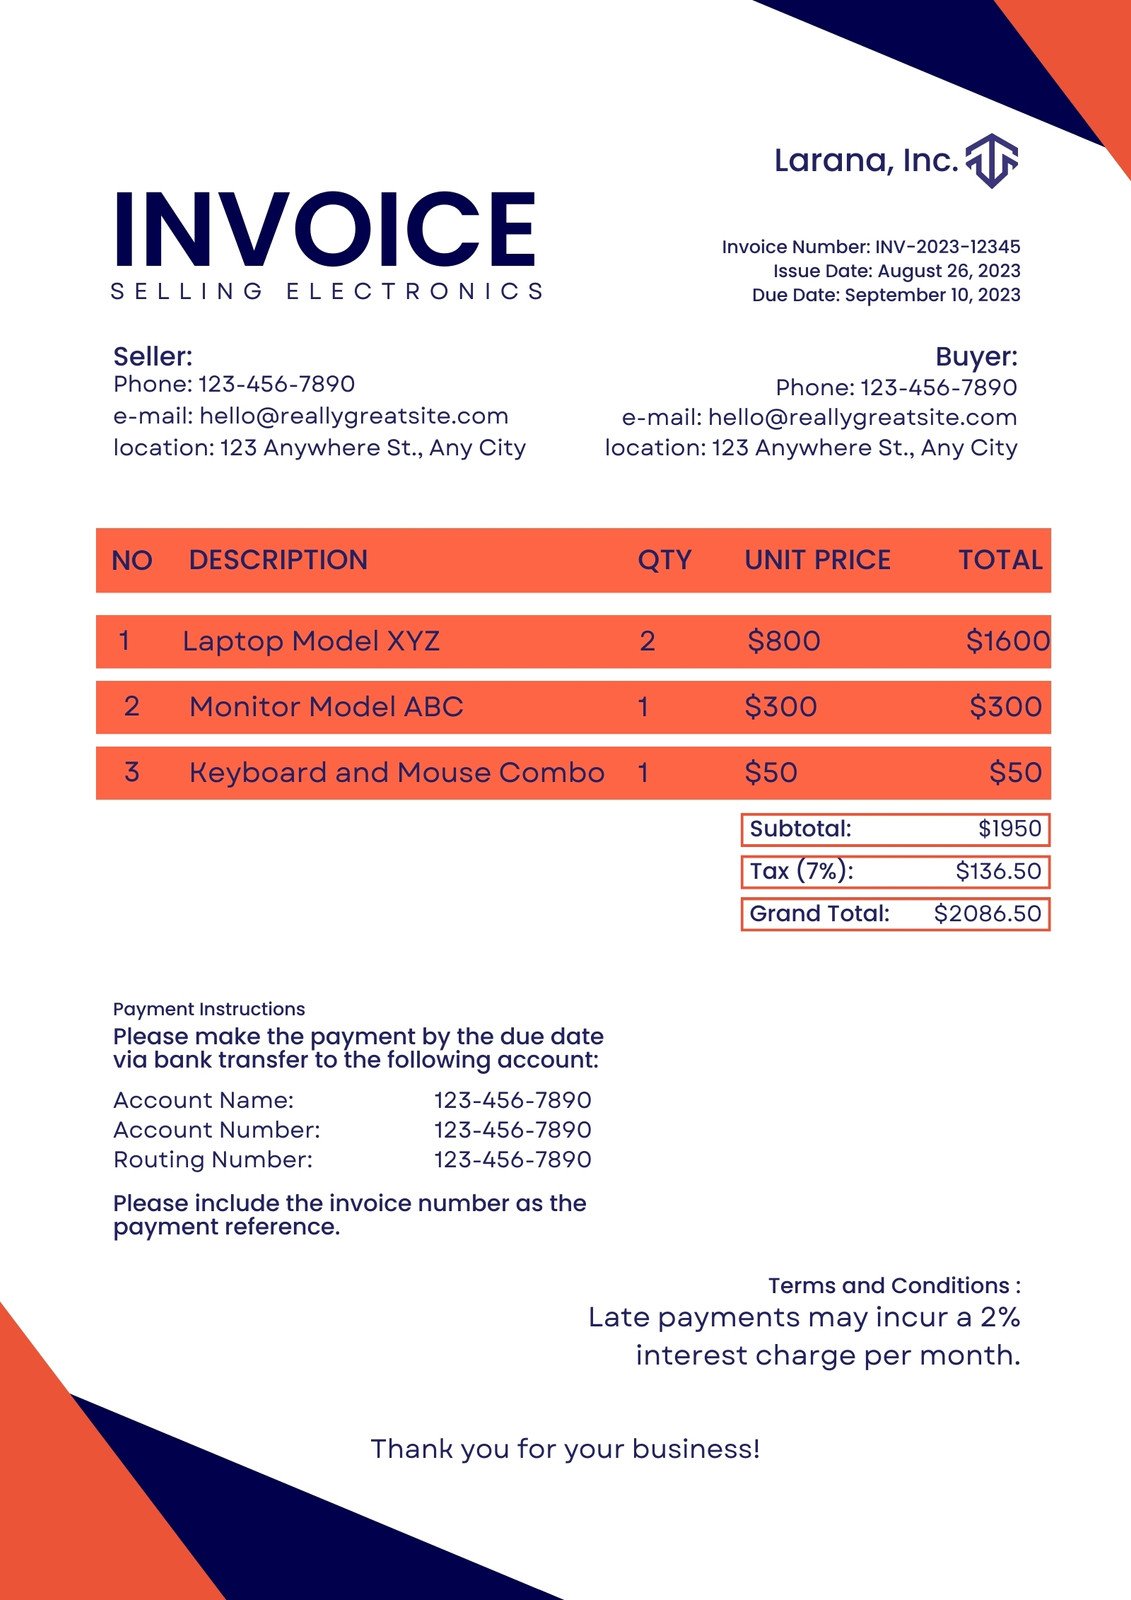 Free, printable, professional invoice templates to customize